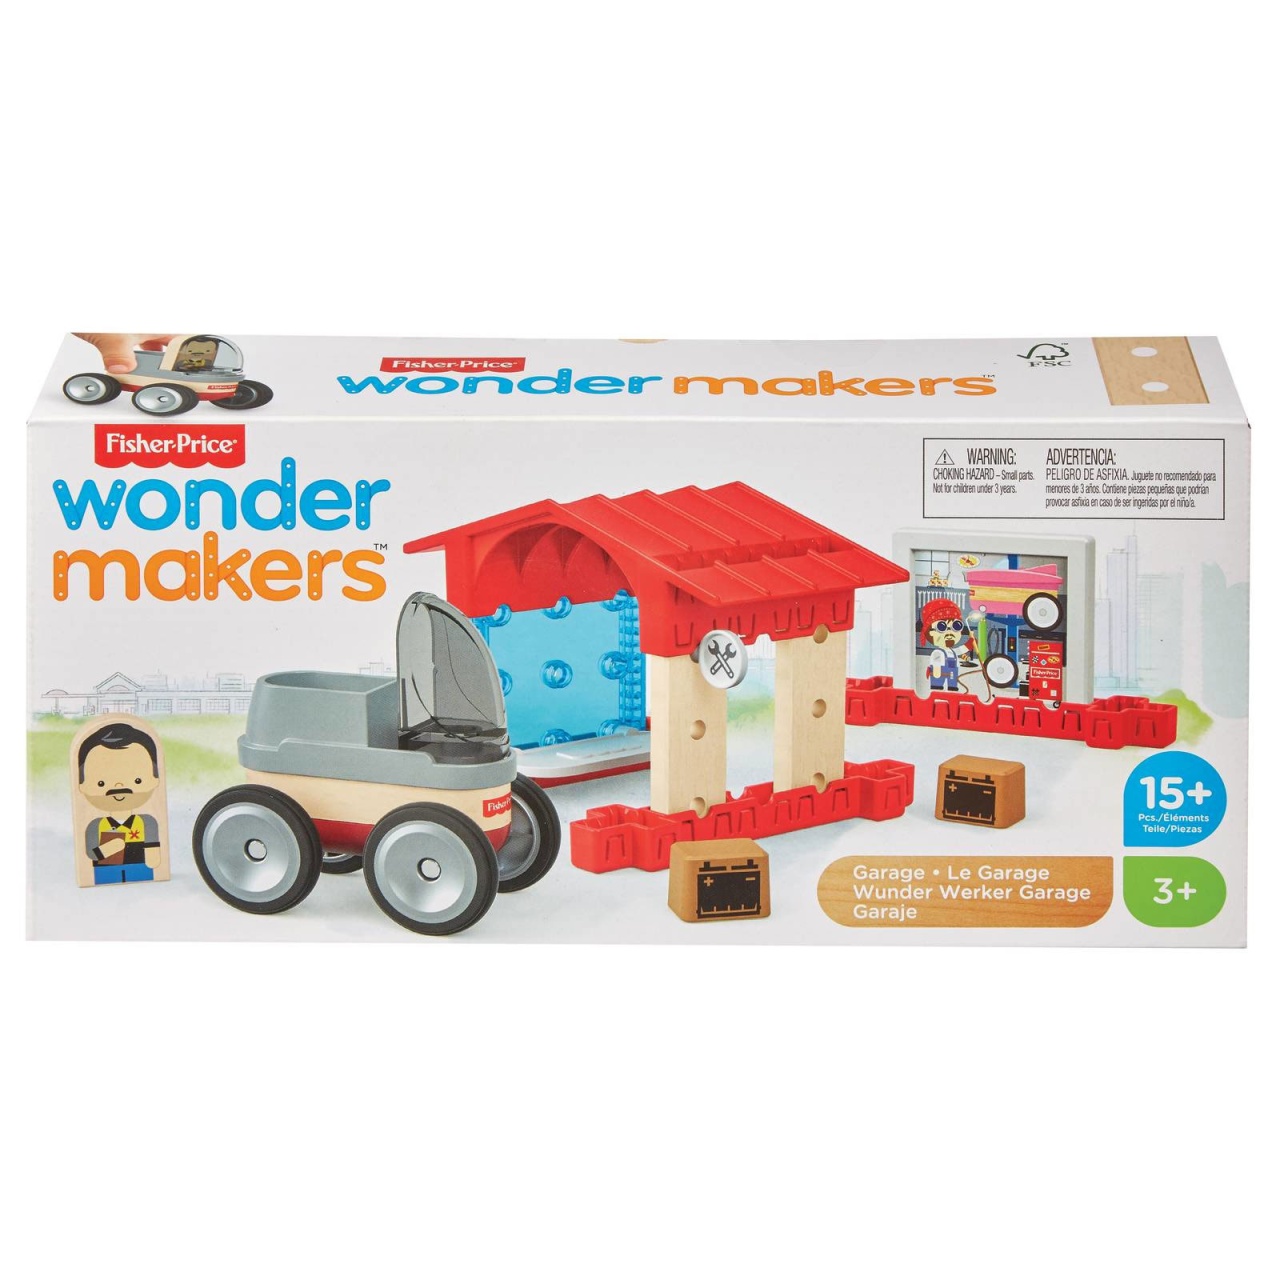 Fisher-Price Wonder makers Garage